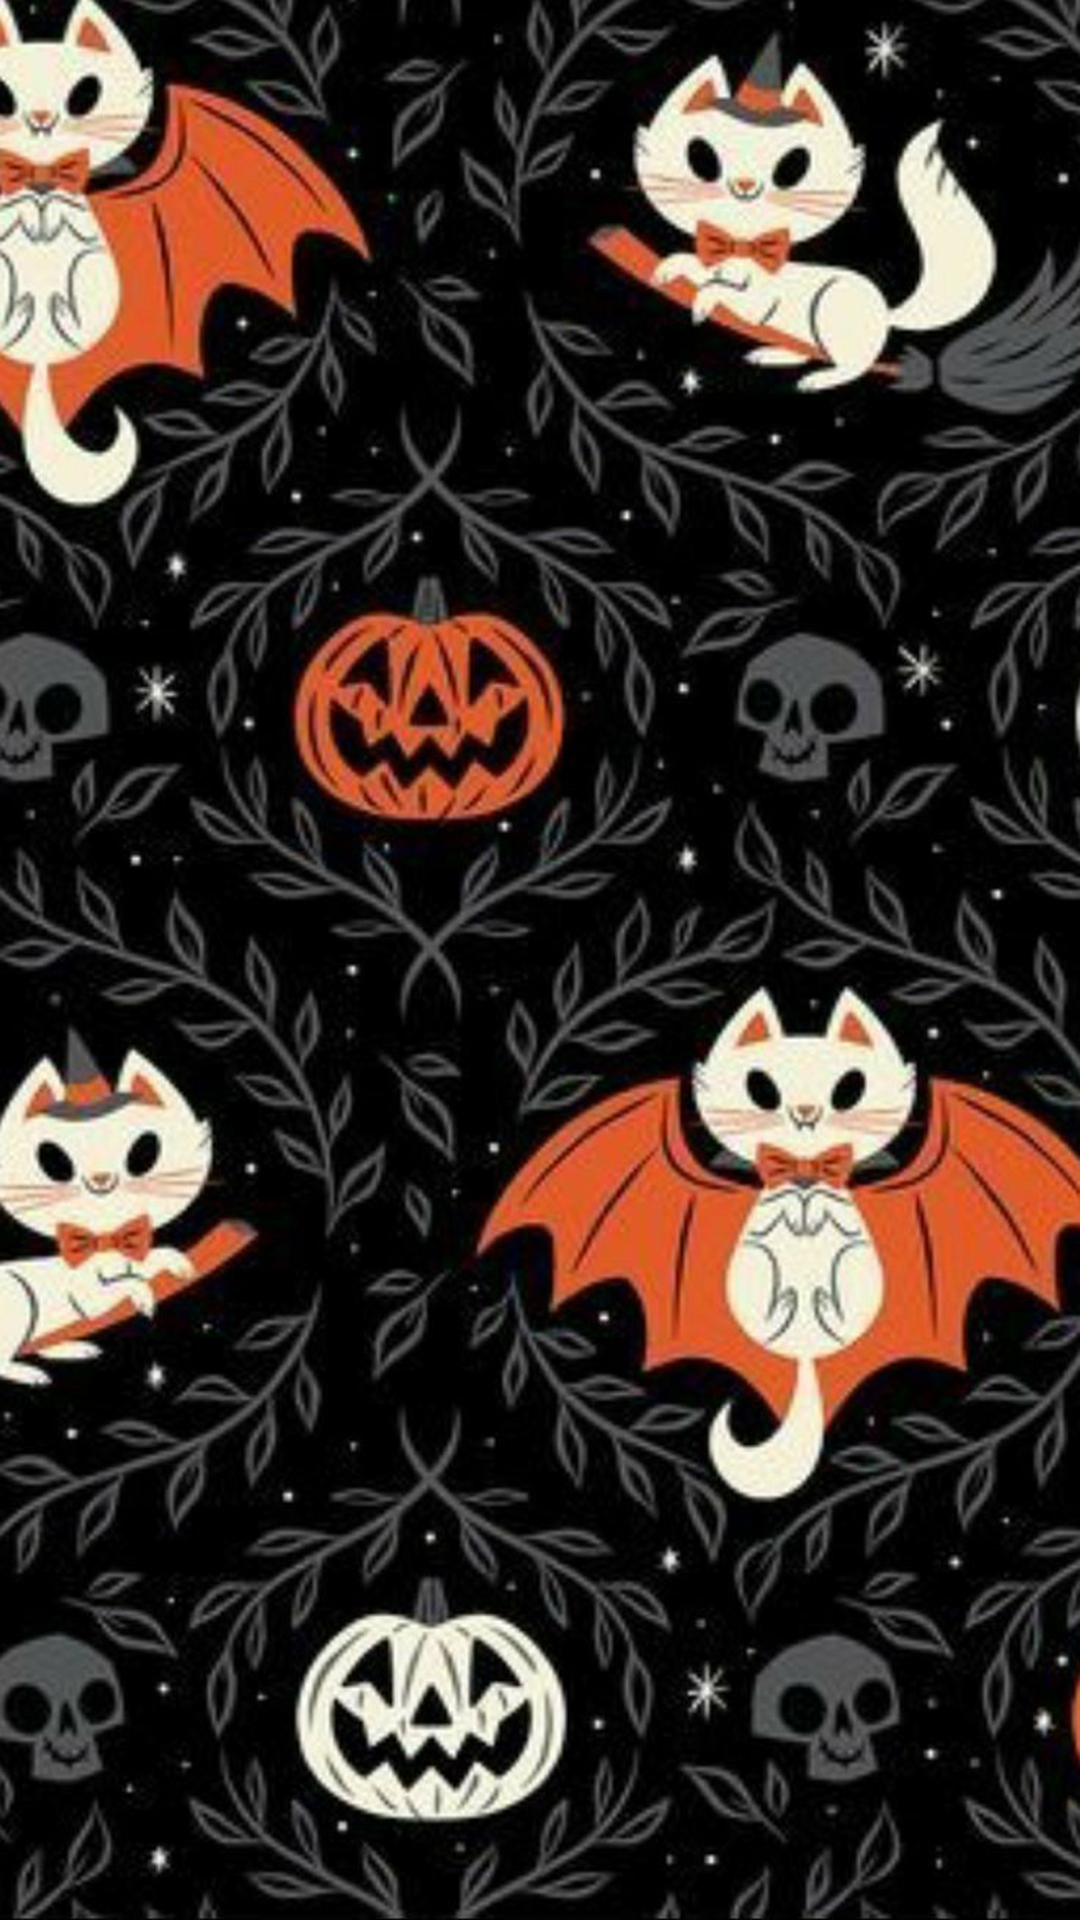 Cute Wallpaper Black Halloween Cat Theme Apk Download for Android Latest  version 100 jpcoatmandroidplusblackhalloweencat